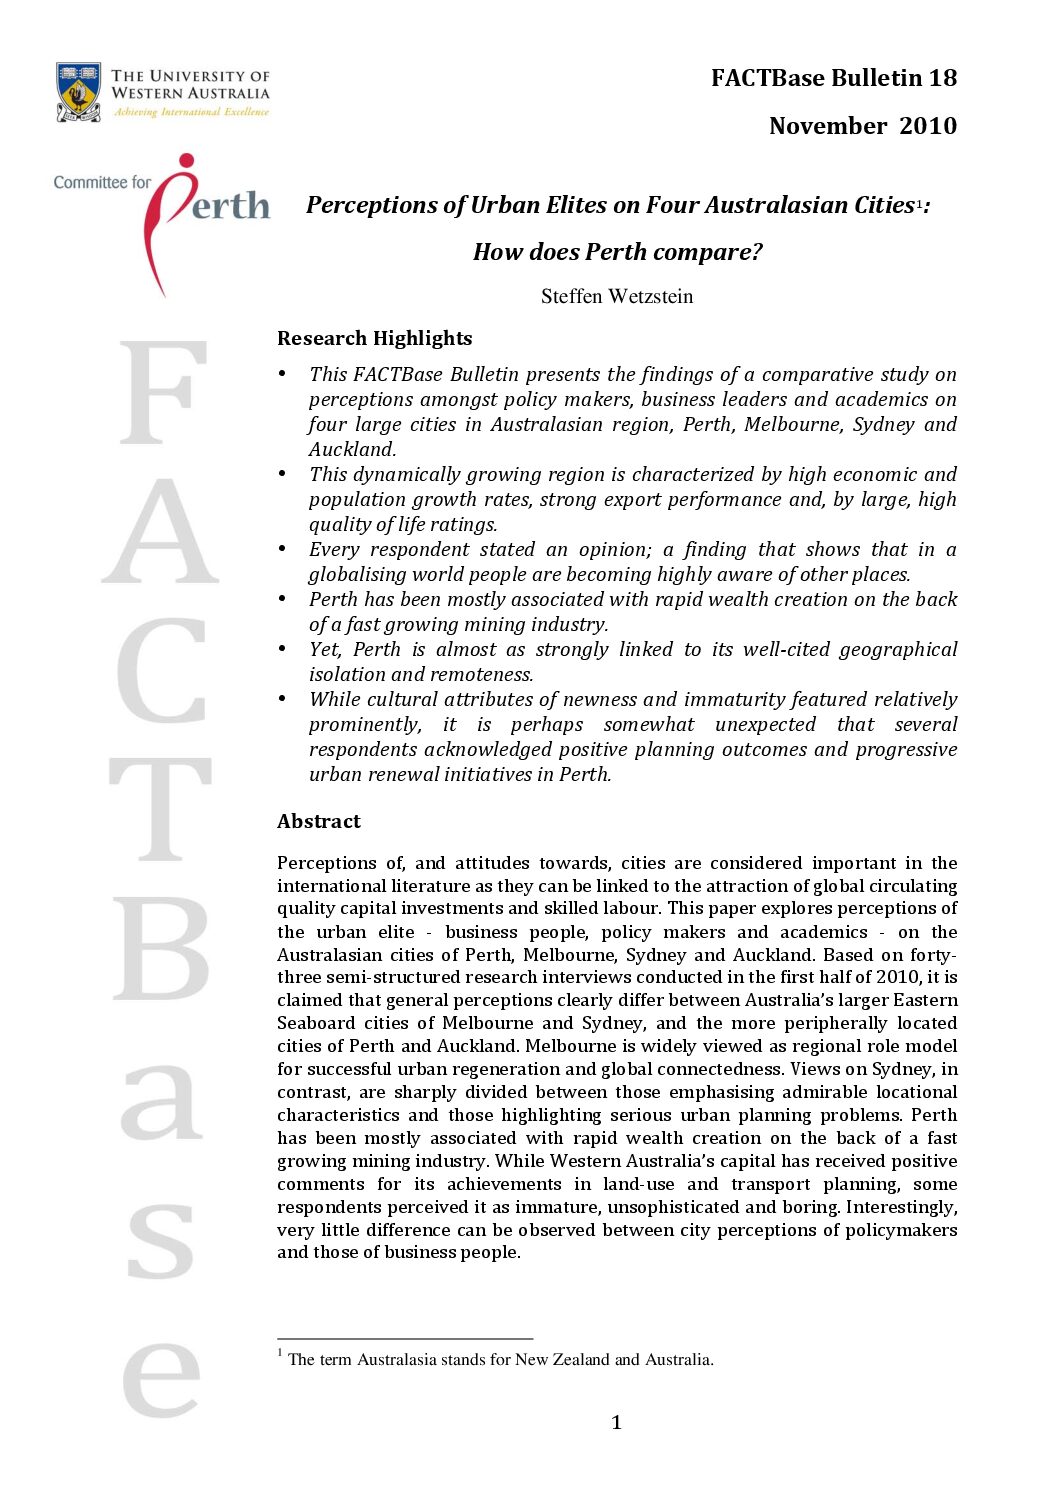 FACTBase Bulletin 18 - November 2010